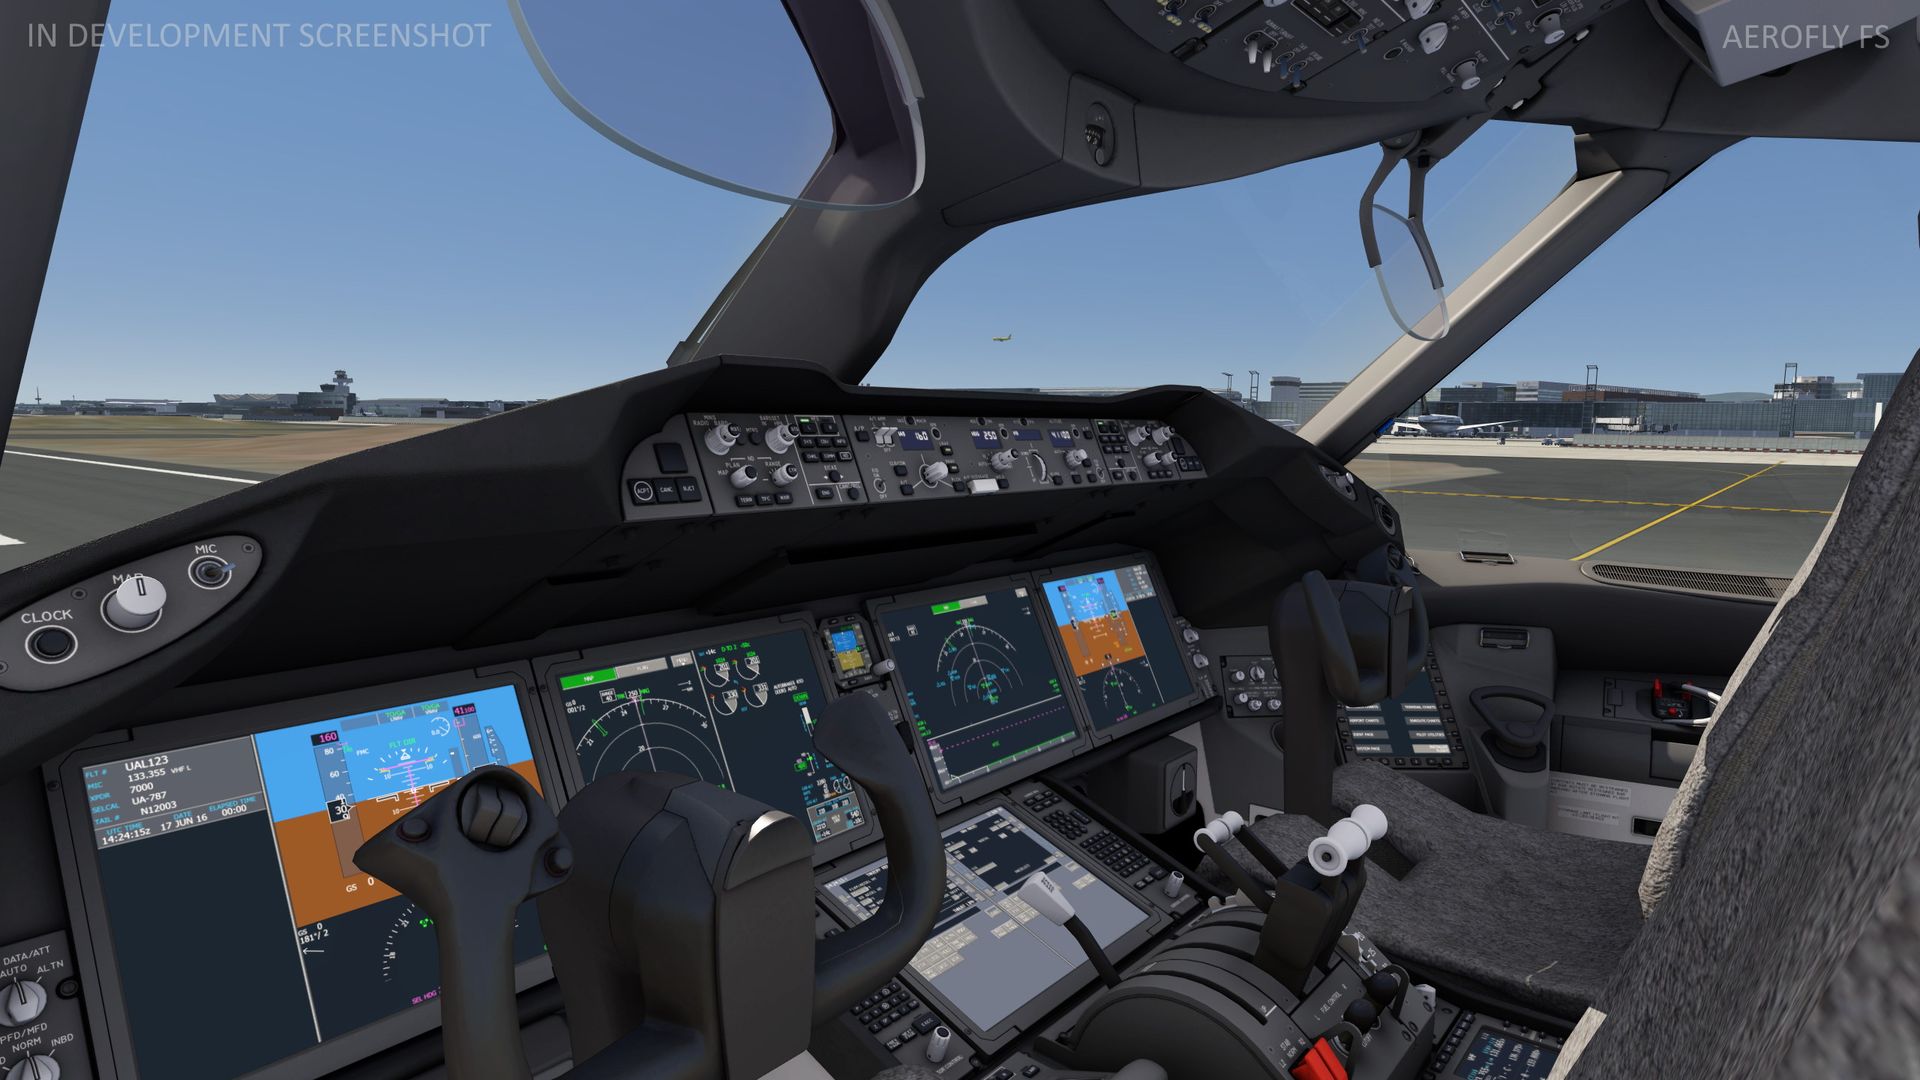 aerofly_fs_b787-10_cockpit_front_panel